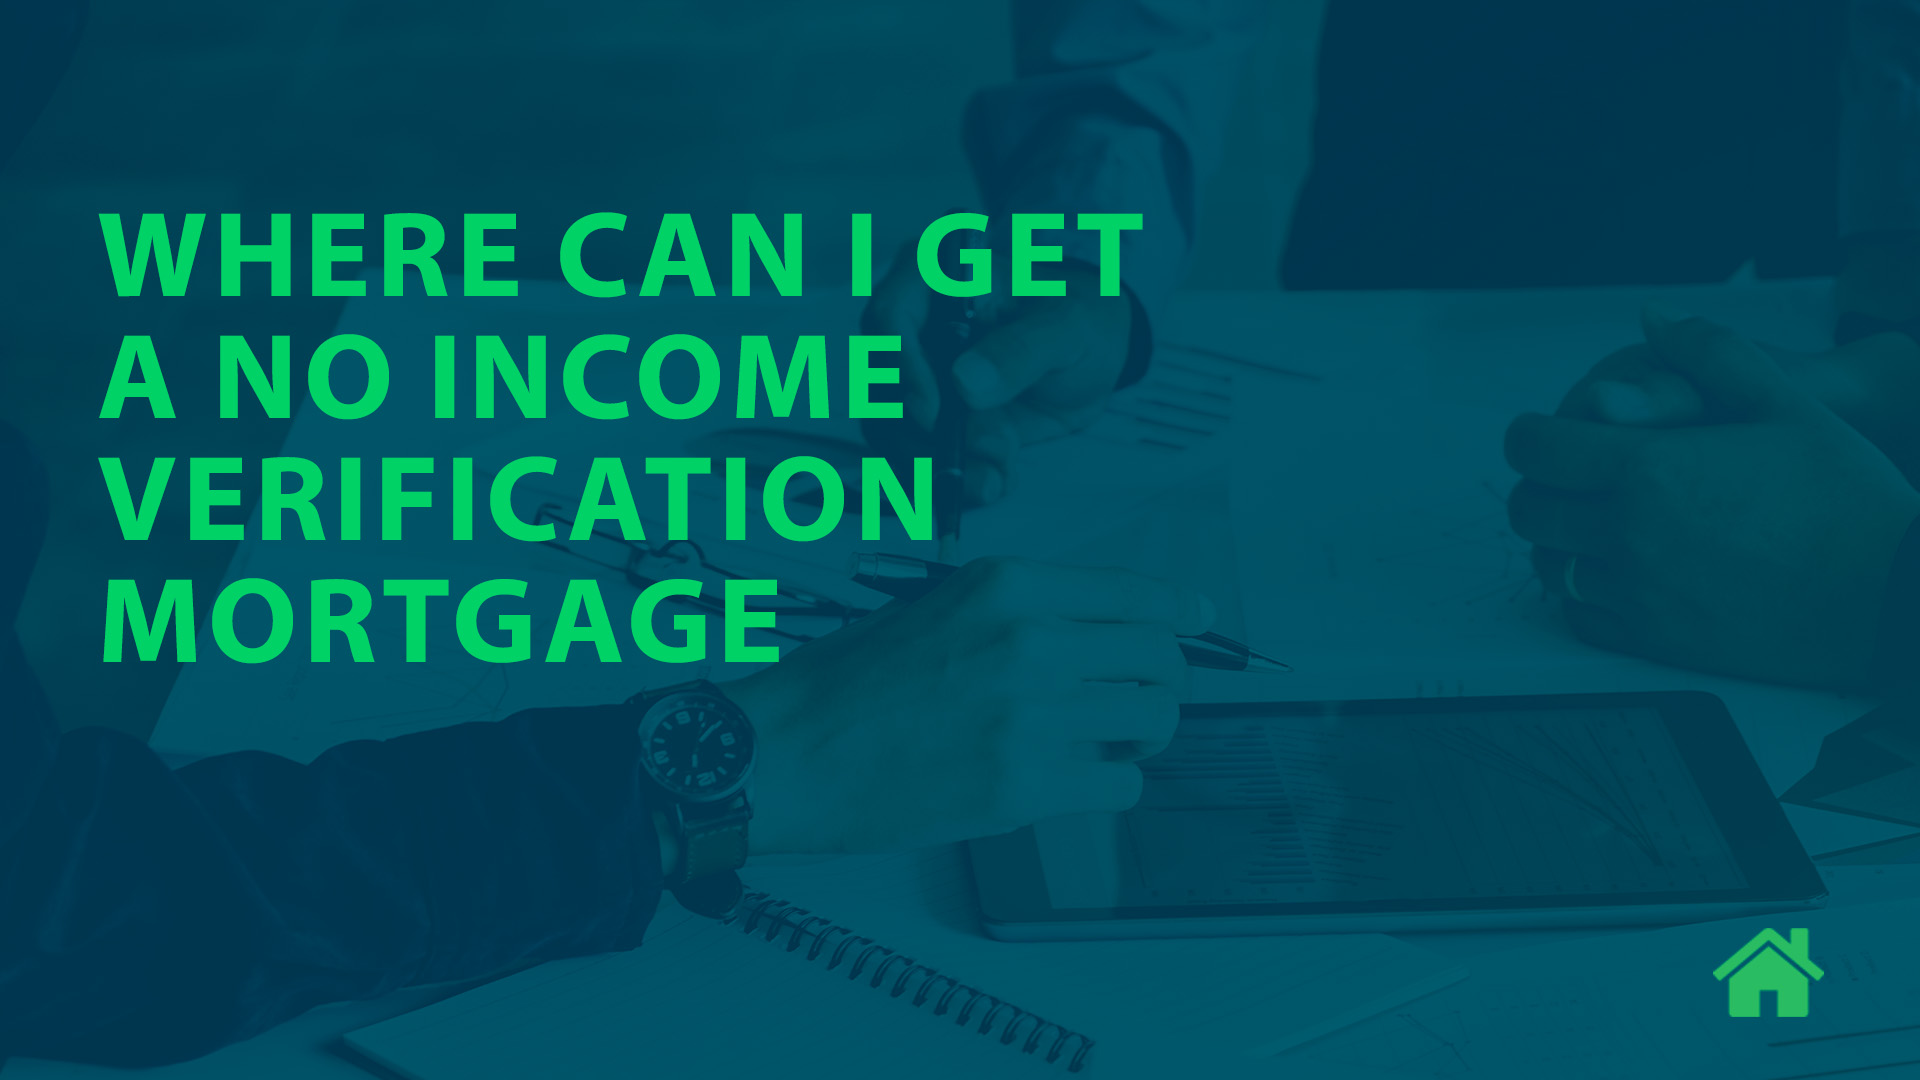 Where Can I Get a No Income Verification Mortgage